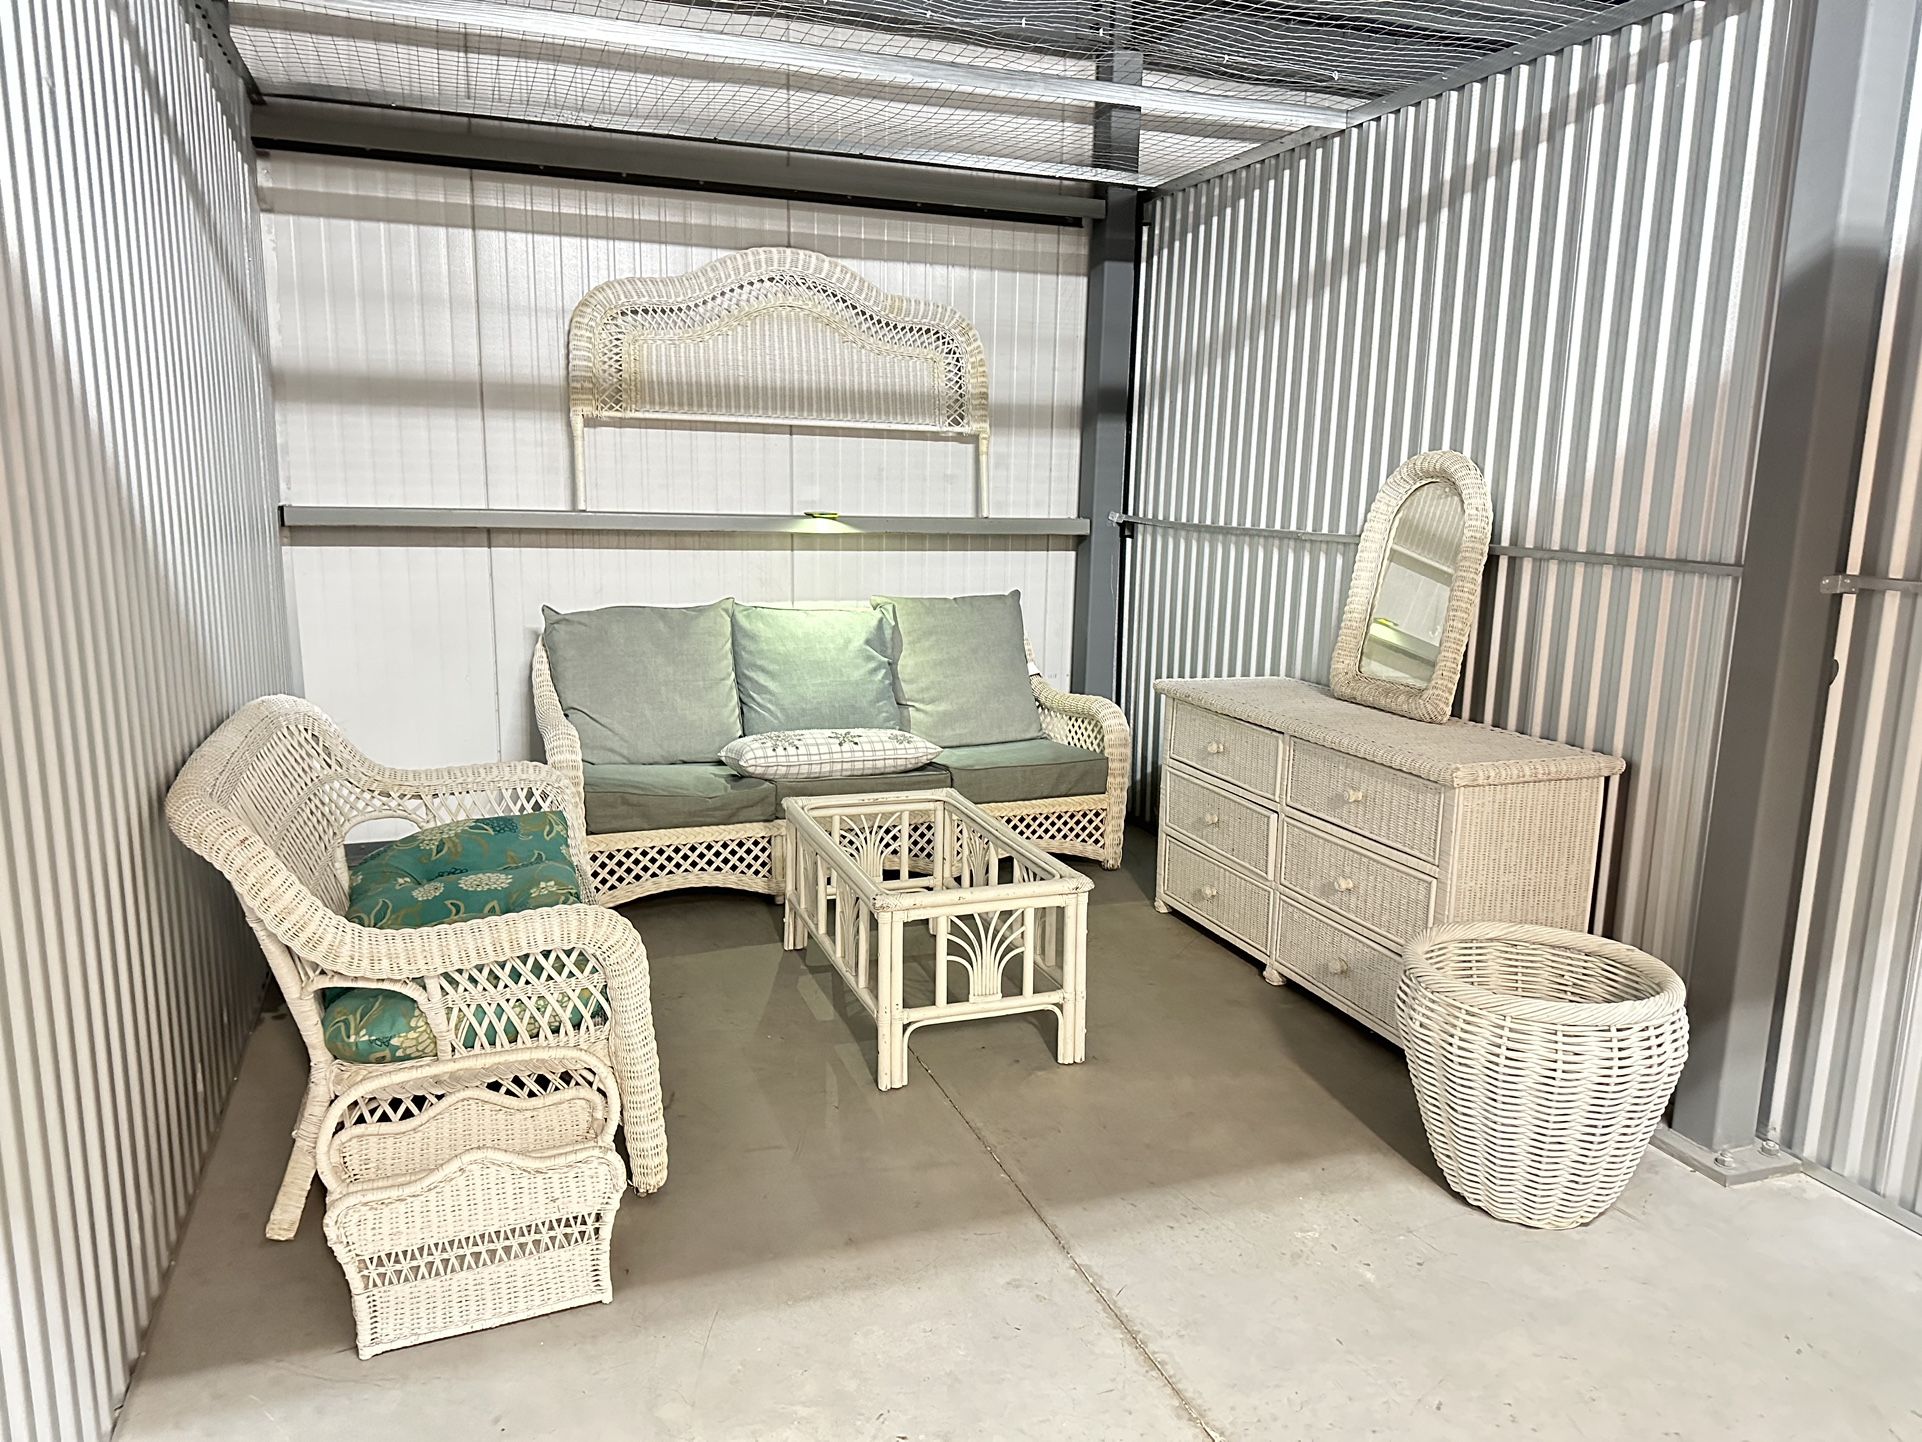 beautiful rattan set  chair / table / outdoor / brand Lane venture . 8 pcs